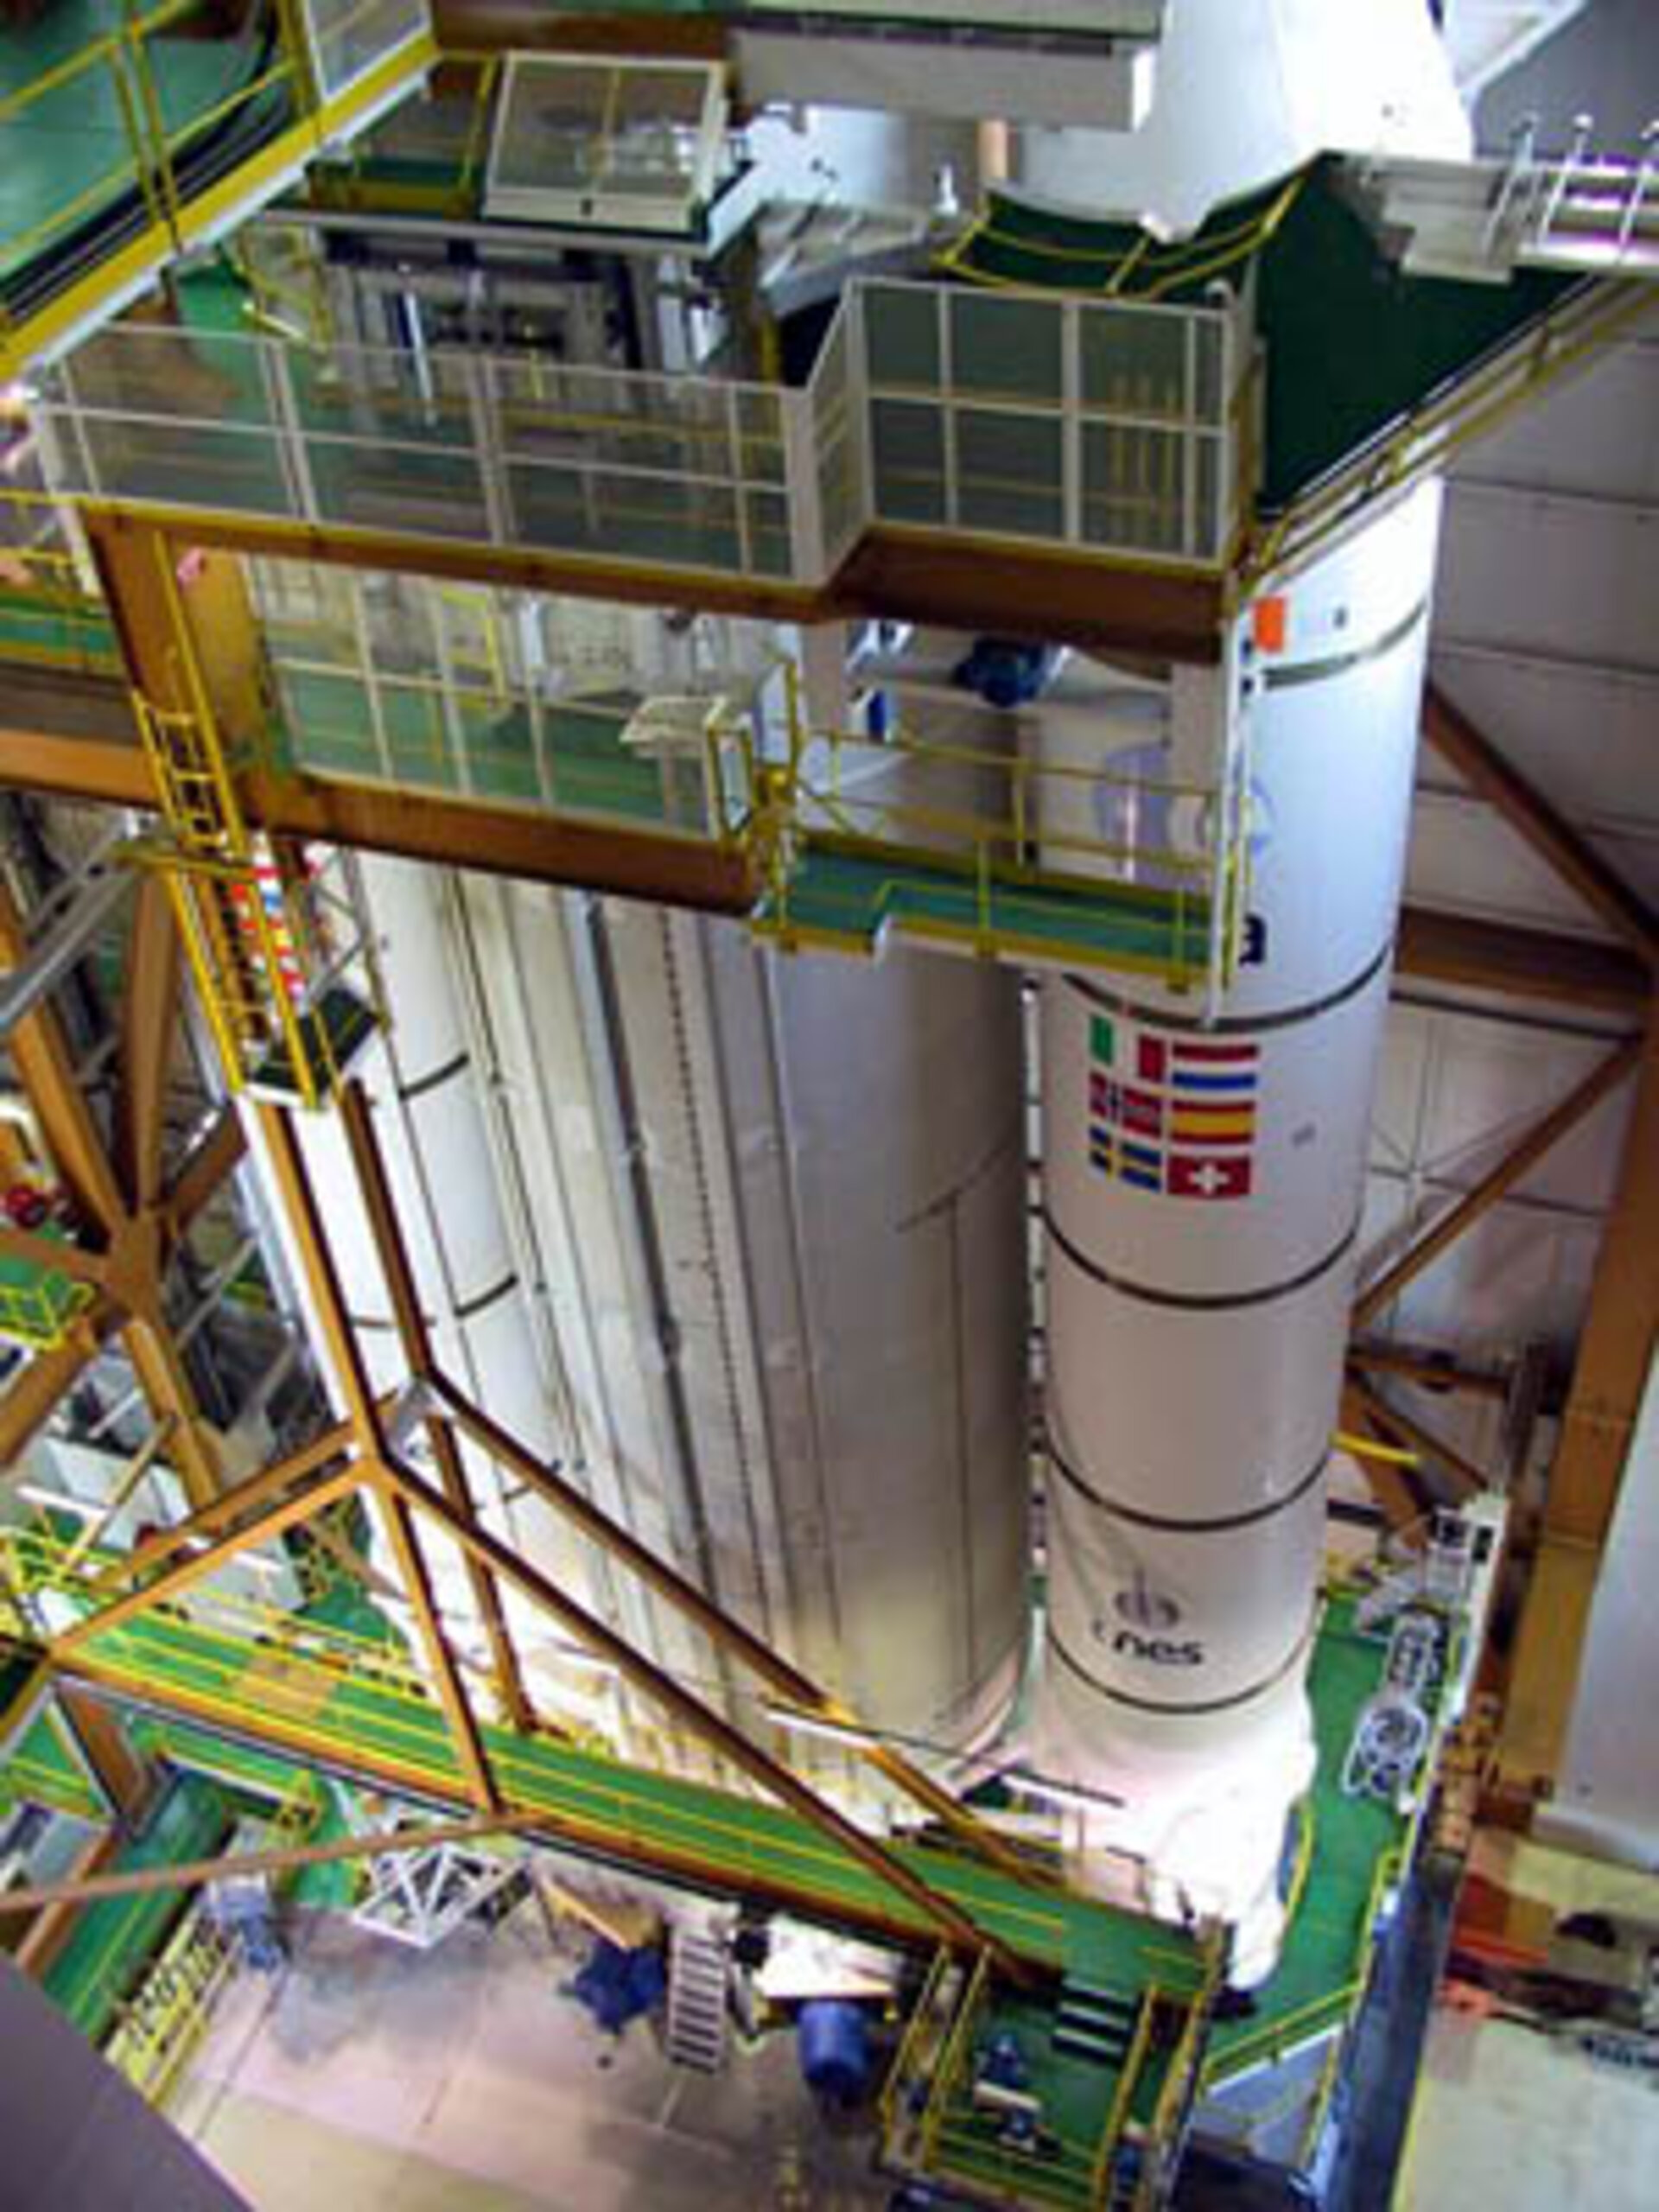 The Ariane 5 launcher for Envisat